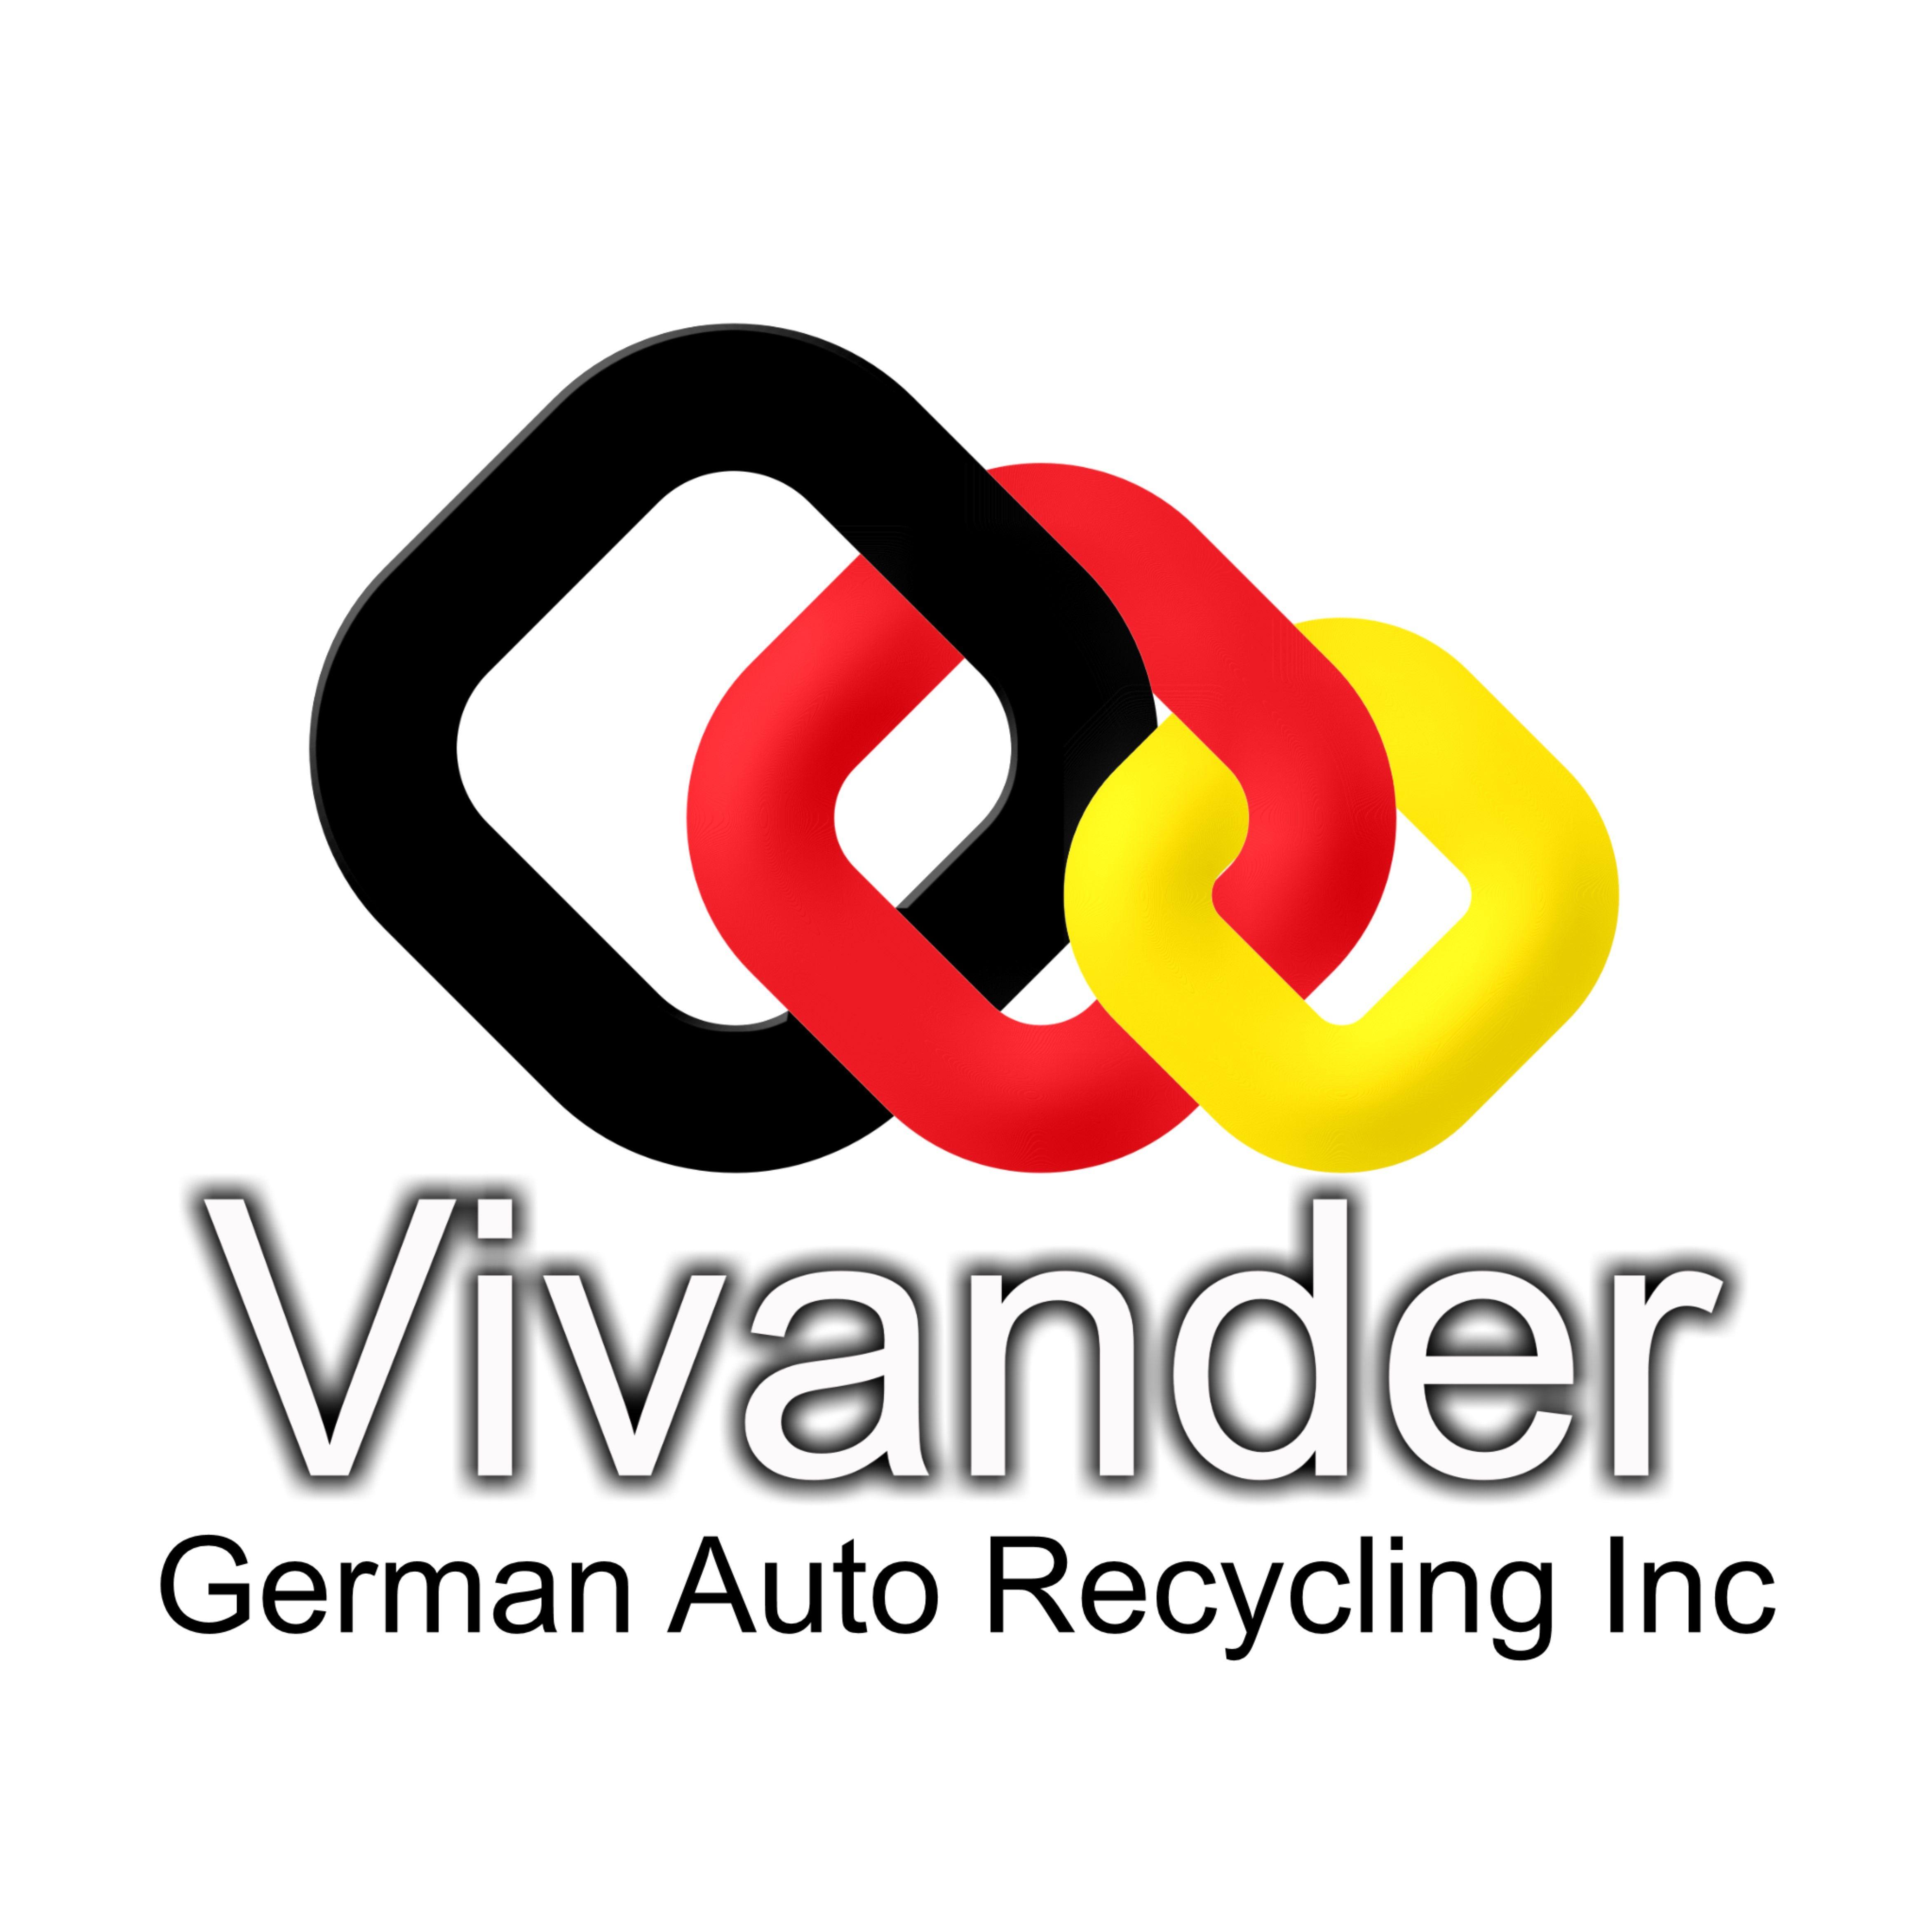 German Auto Logo - Logo Design. 'Vivander German Auto Recycling Inc' design